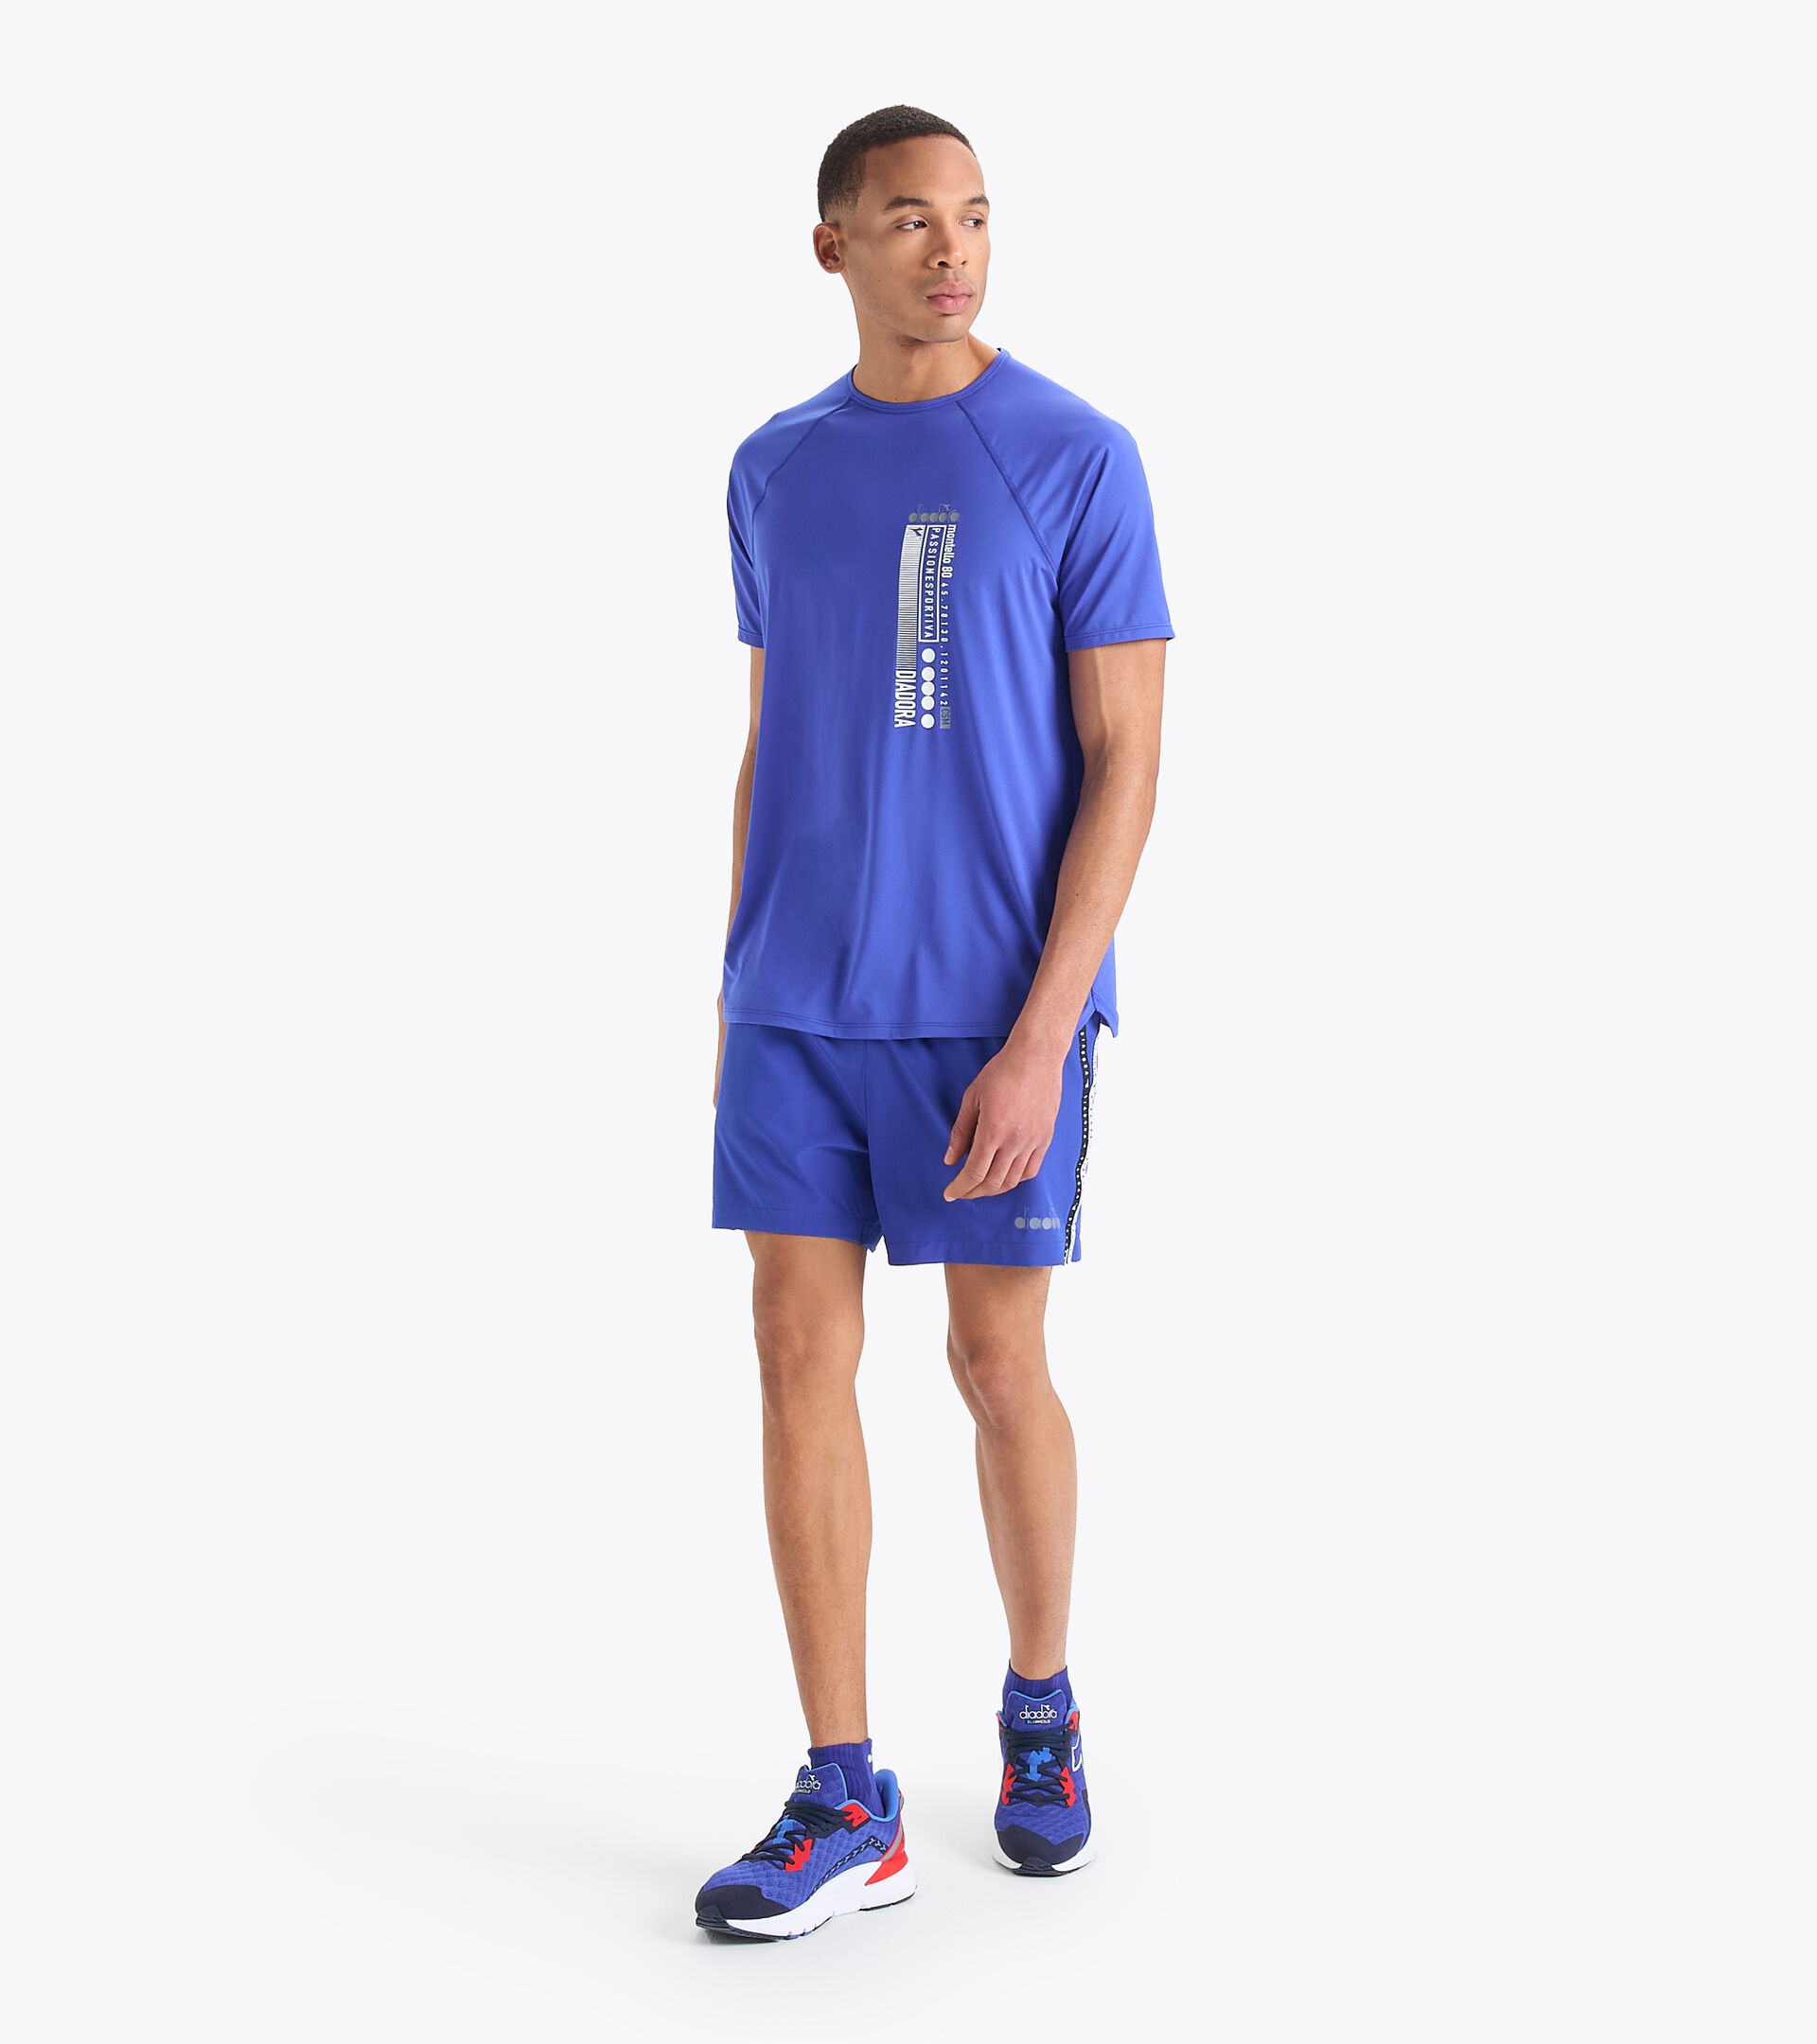 Running shorts - Men  MICROFIBER SHORTS 12,5 CM IMPERIAL BLUE - Diadora